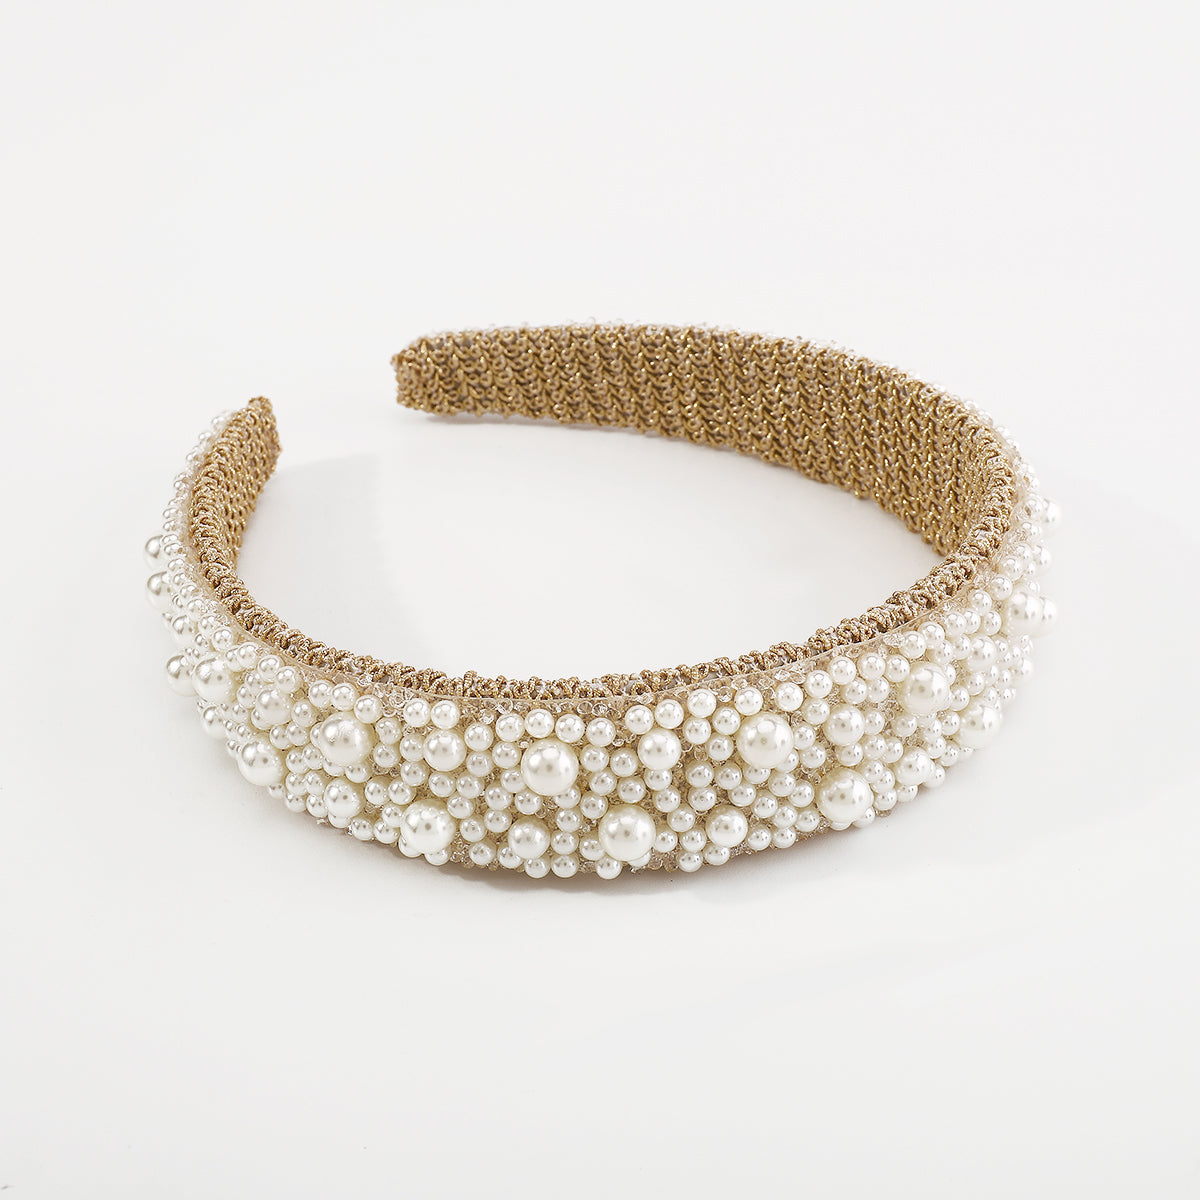 Temperament Full Pearls & Crystal Flower Hairbands medyjewelry